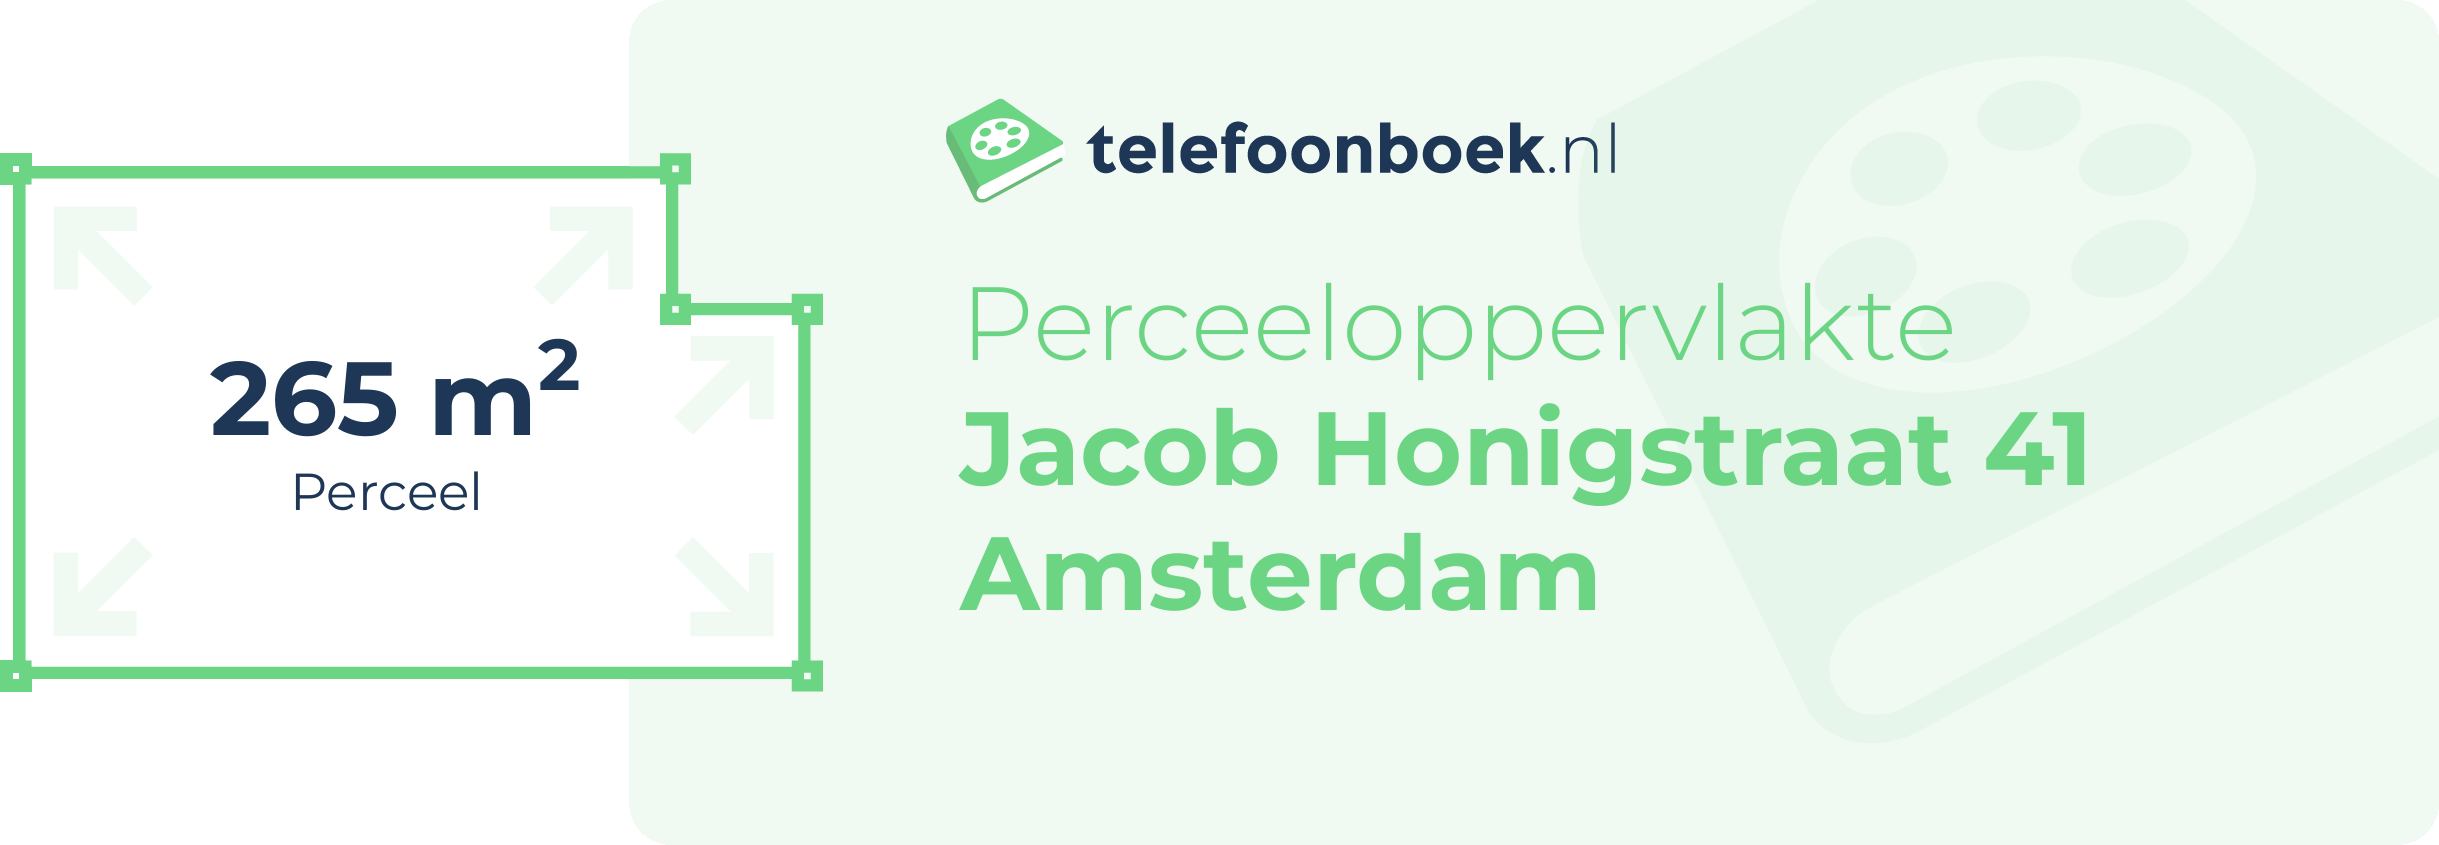 Perceeloppervlakte Jacob Honigstraat 41 Amsterdam